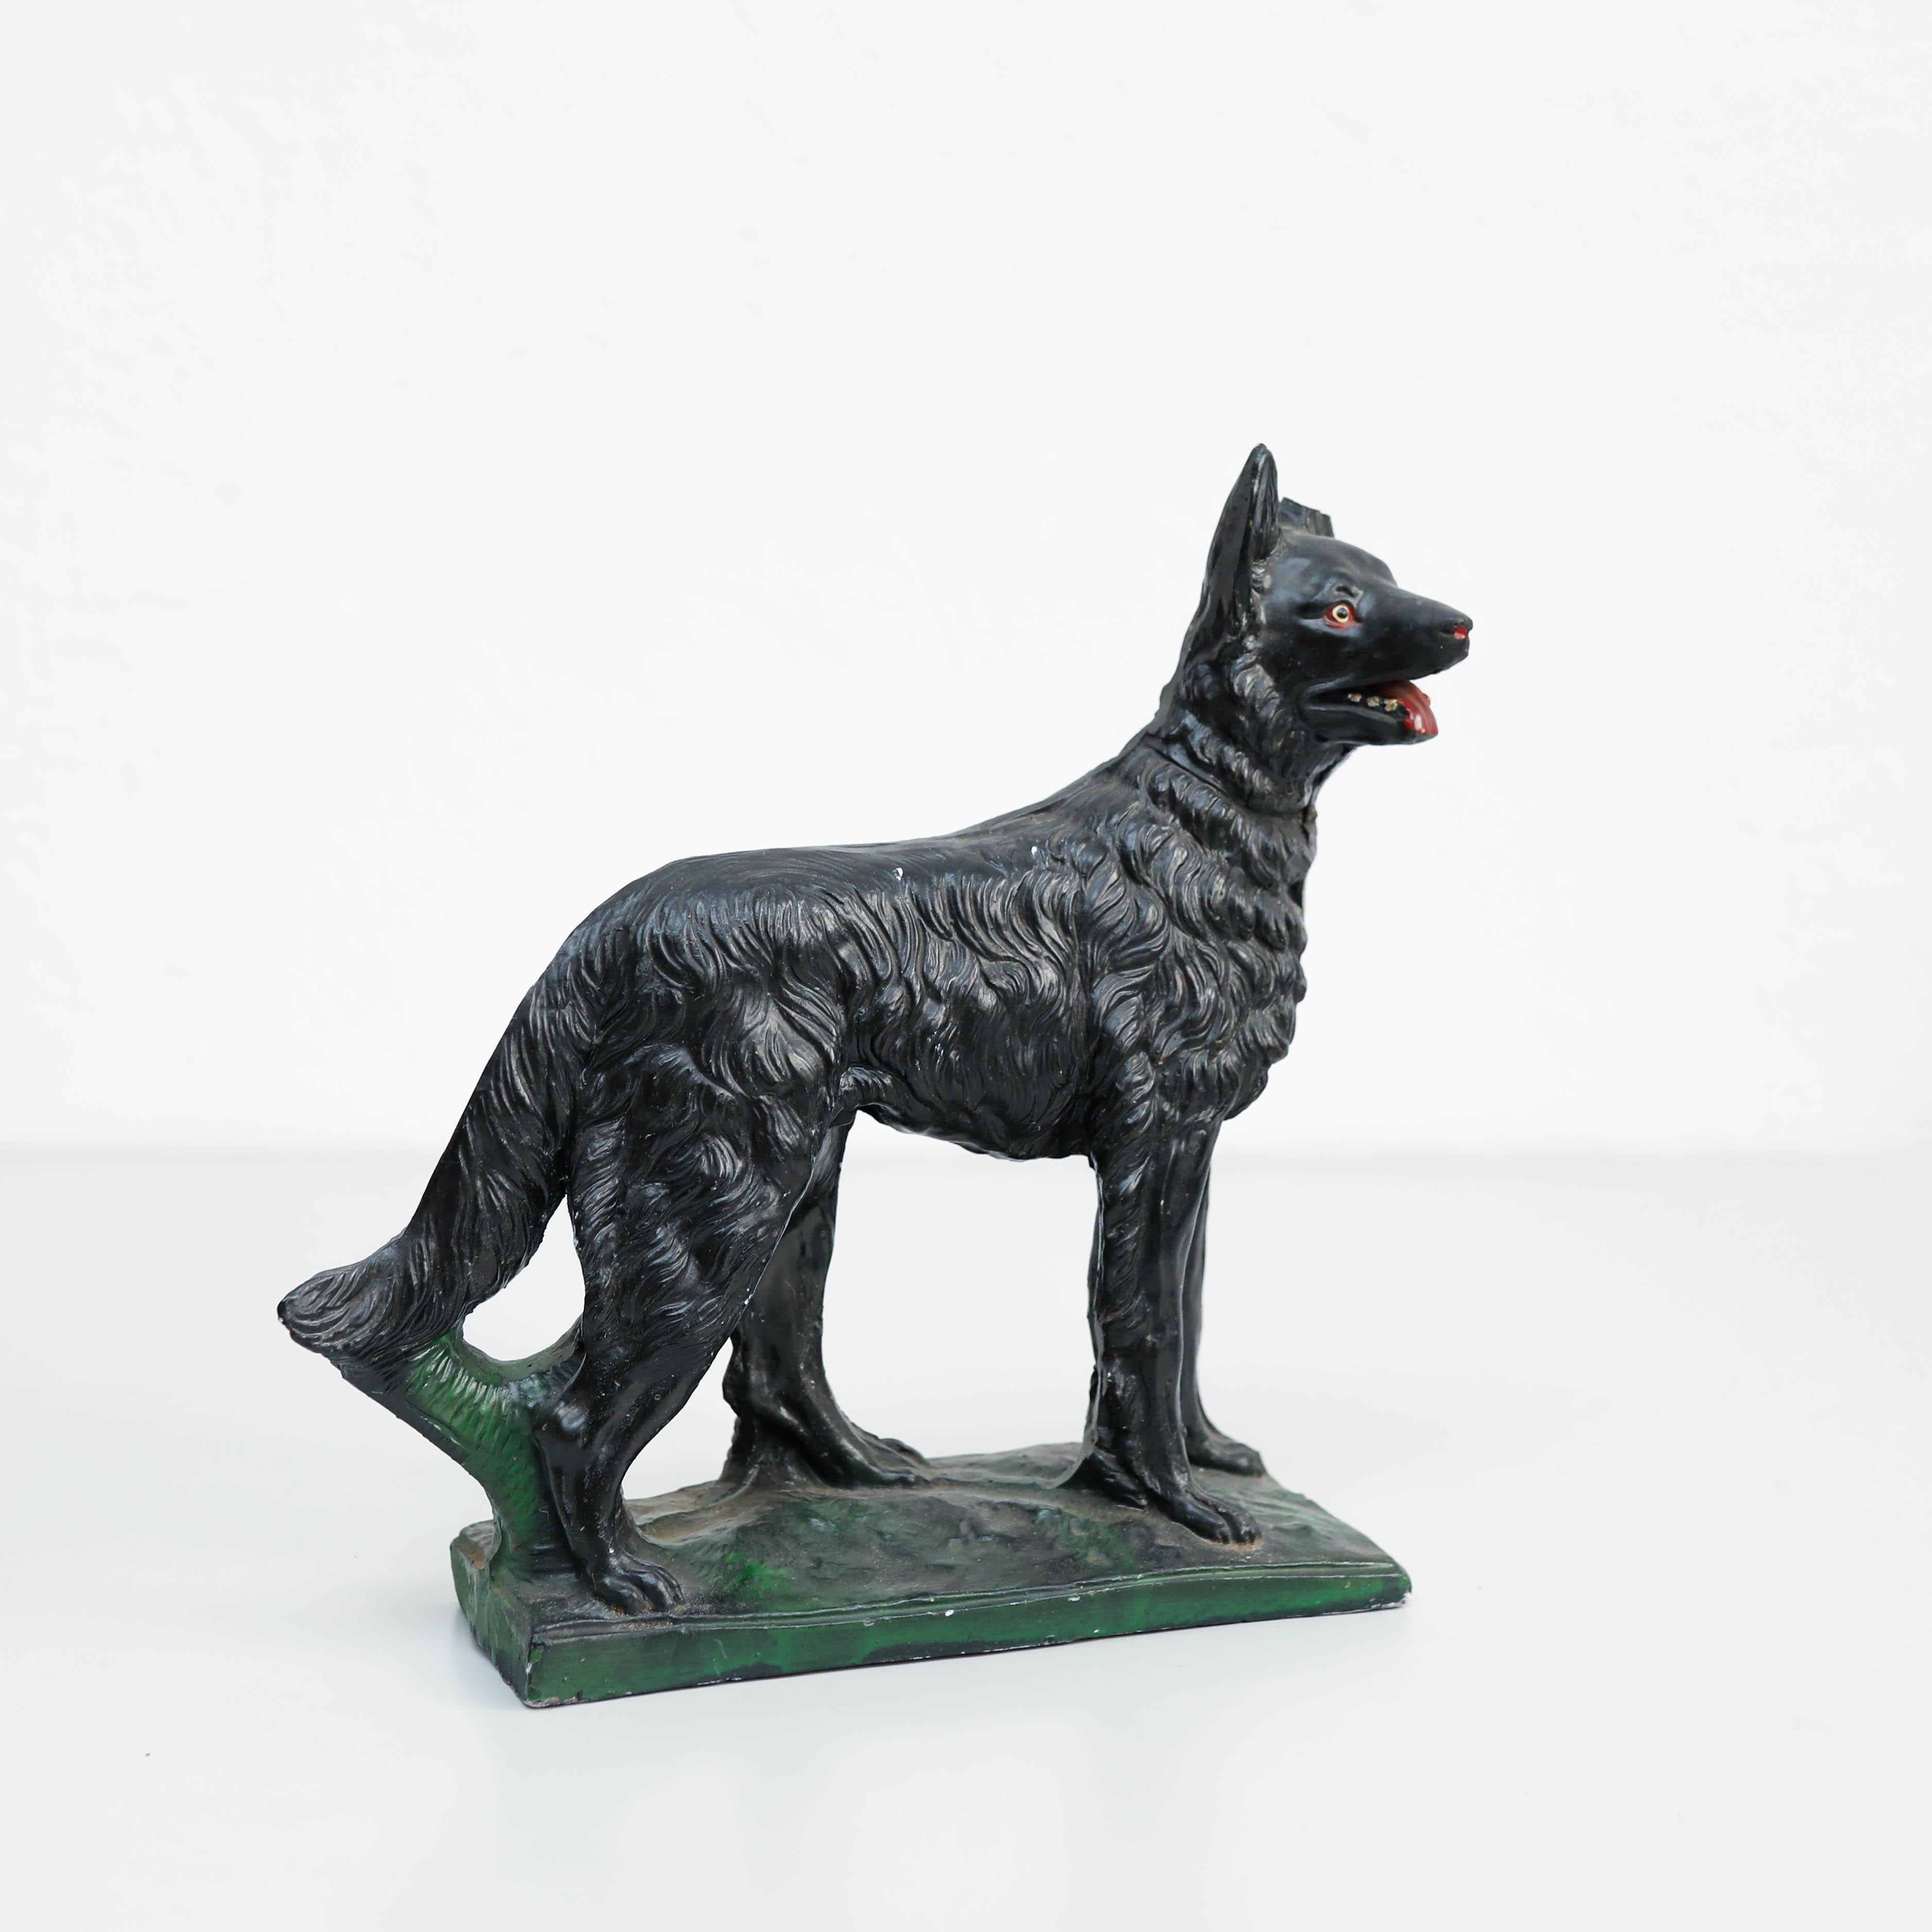 Shepherd-Hundefigur im Vintage-Stil: Charmante und rustikale, um 1980 (Ende des 20. Jahrhunderts) im Angebot